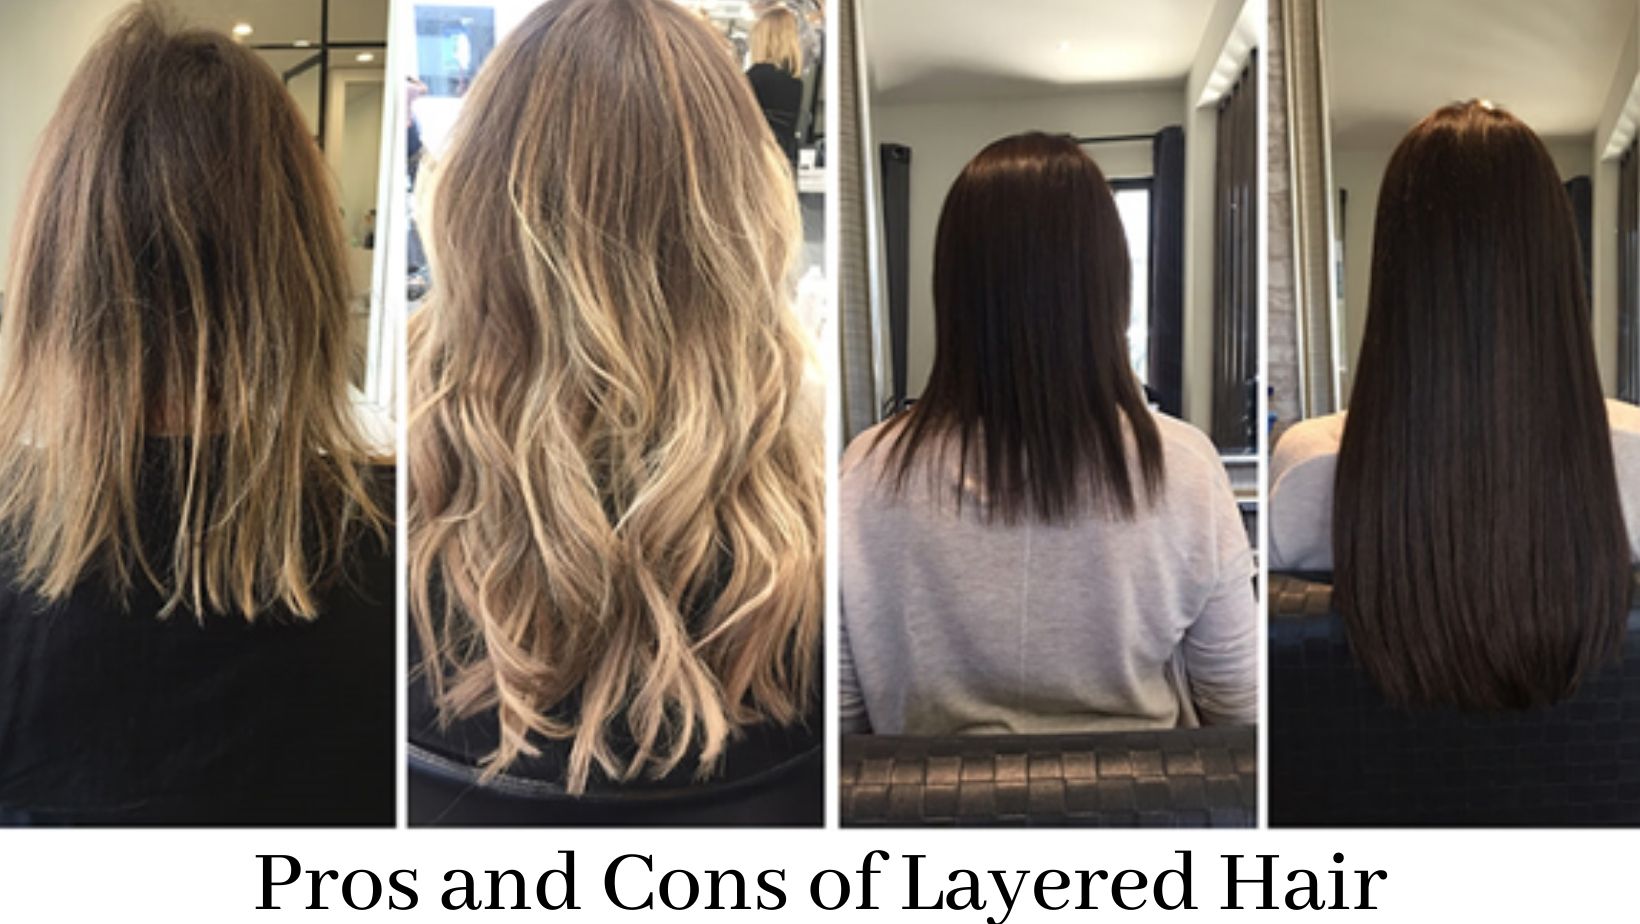 Terrys Color Studio - Beautiful Black Hair with tapered long layers.# hairstyles #haircut #arlingtontx#mansfield #dallas#terryscolorstudio  ##legacysalonspa #hairloss. #hairtreatment #healthyhair #color#longhair  #longlayers | Facebook